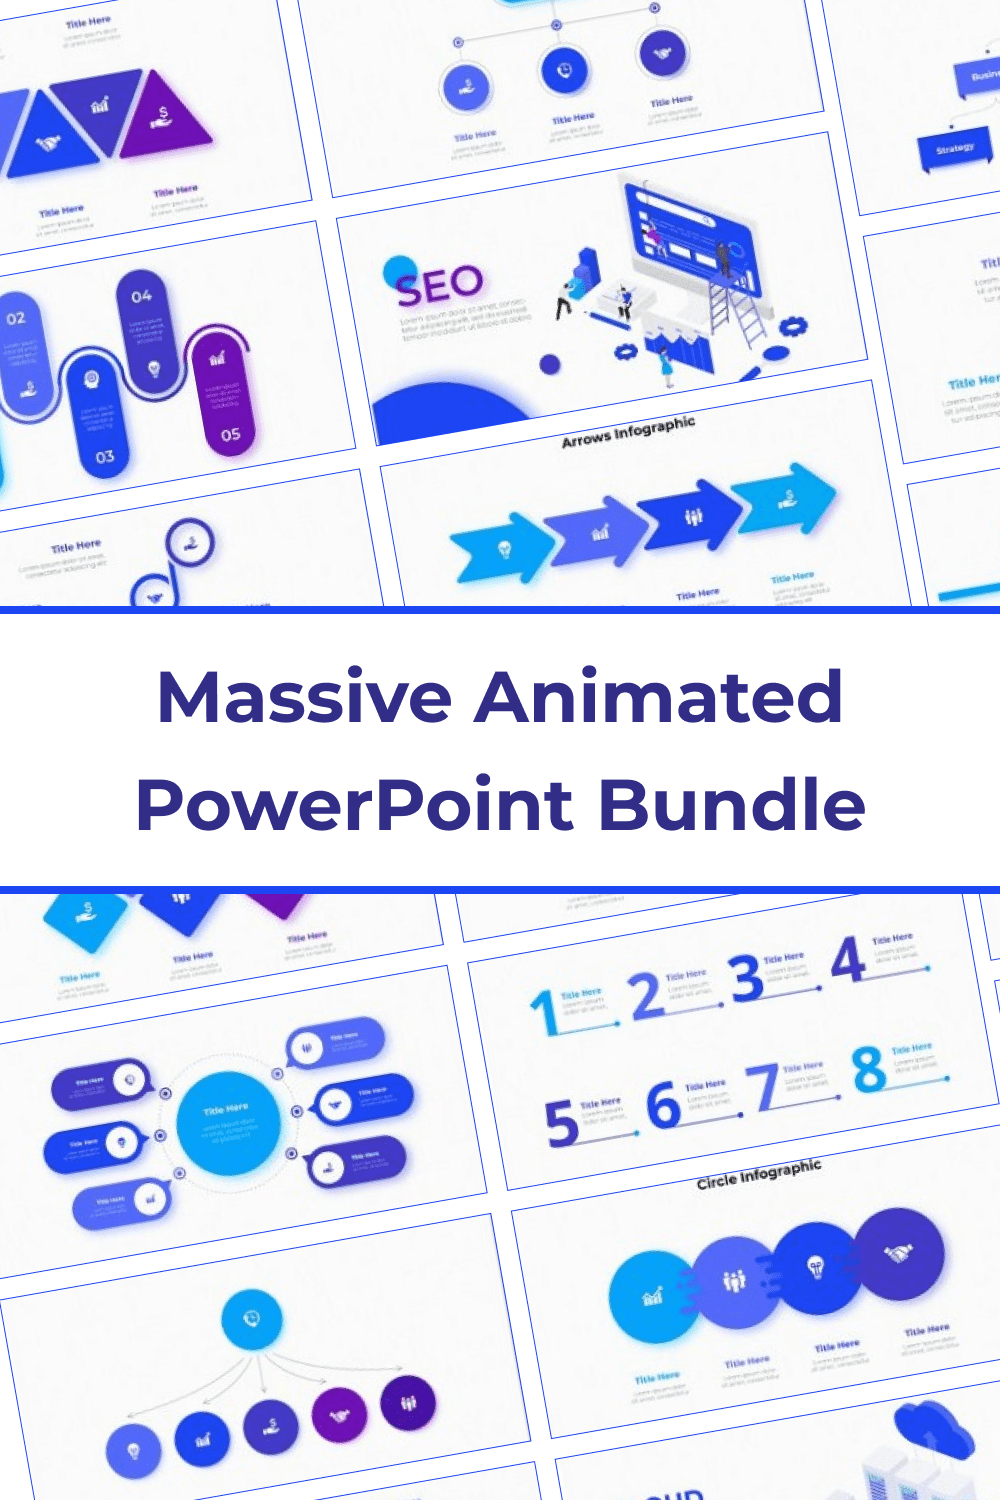 Massive Animated PowerPoint Bundle by MasterBundles Pinterest Collage Image.